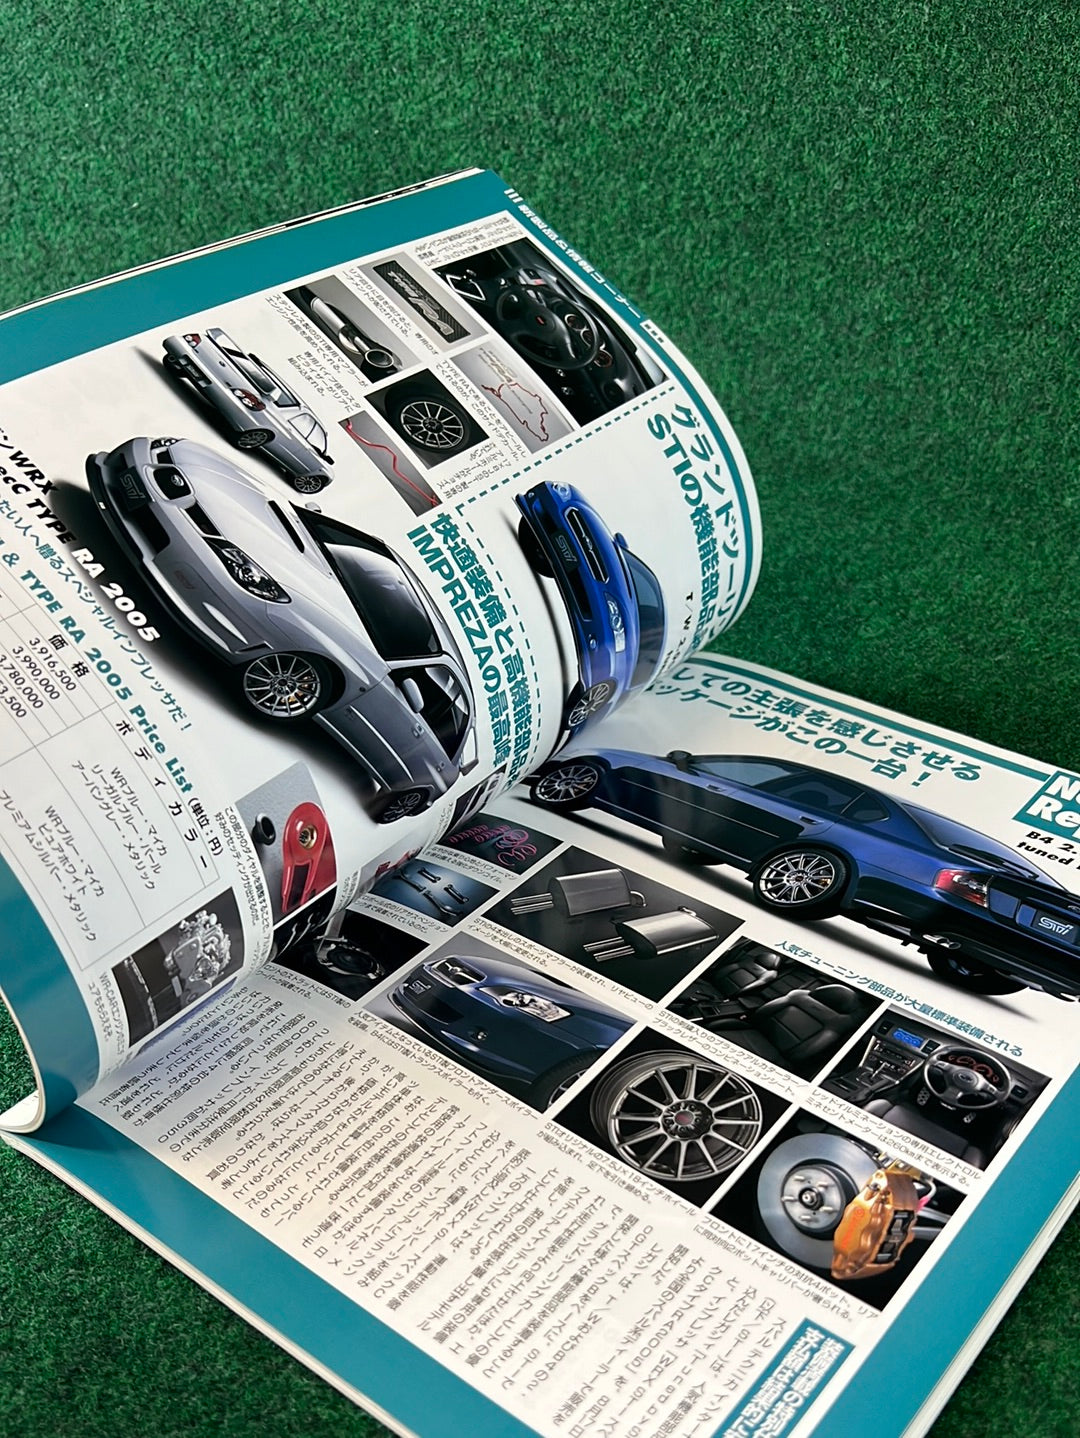 Six Star Subaru Magazine Set - 2005 Vol. 9, 10, 11